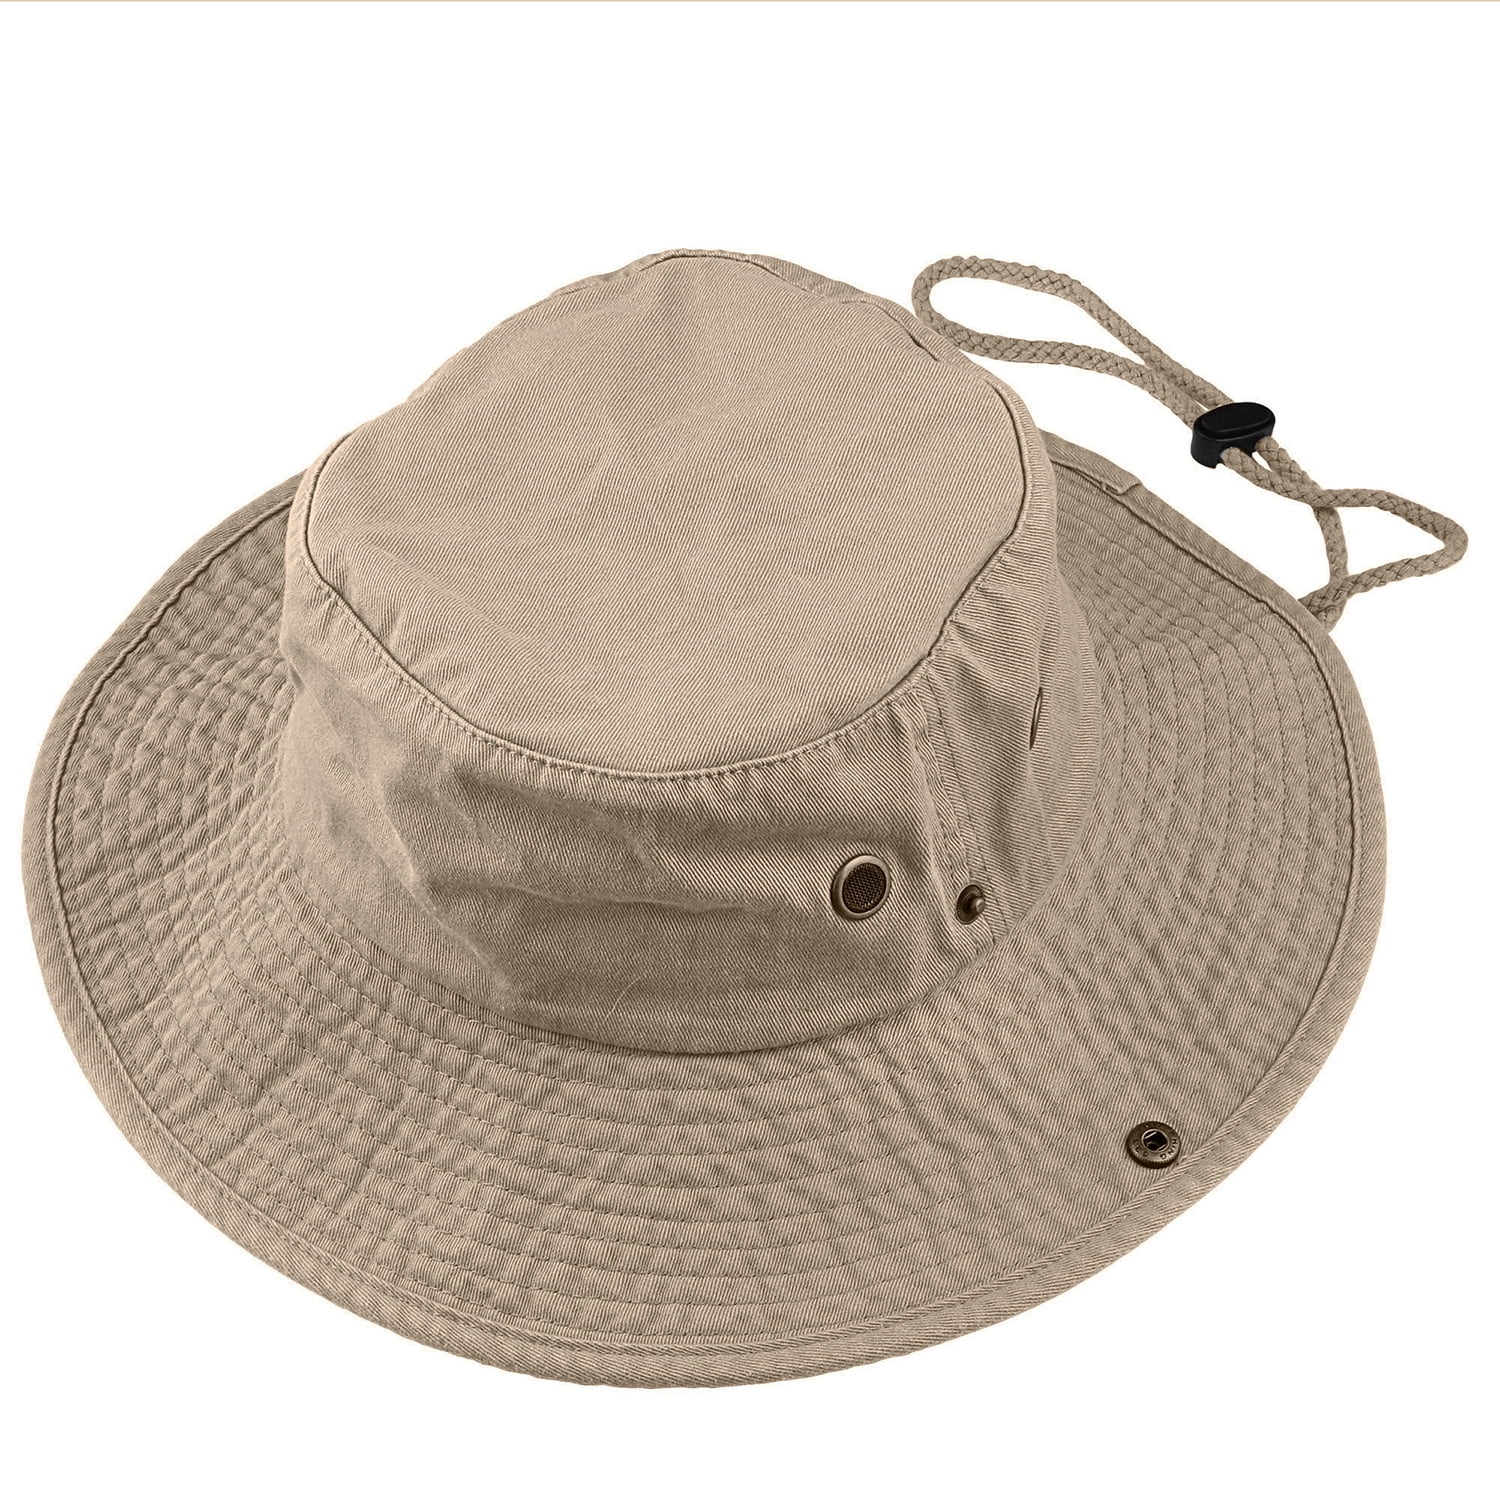 RAOEXI Sun Protection Fishing Hat UPF50+ Men Summer Bucket Hats Wide Brim  Women Breathable Mesh Safari Boonie Cap